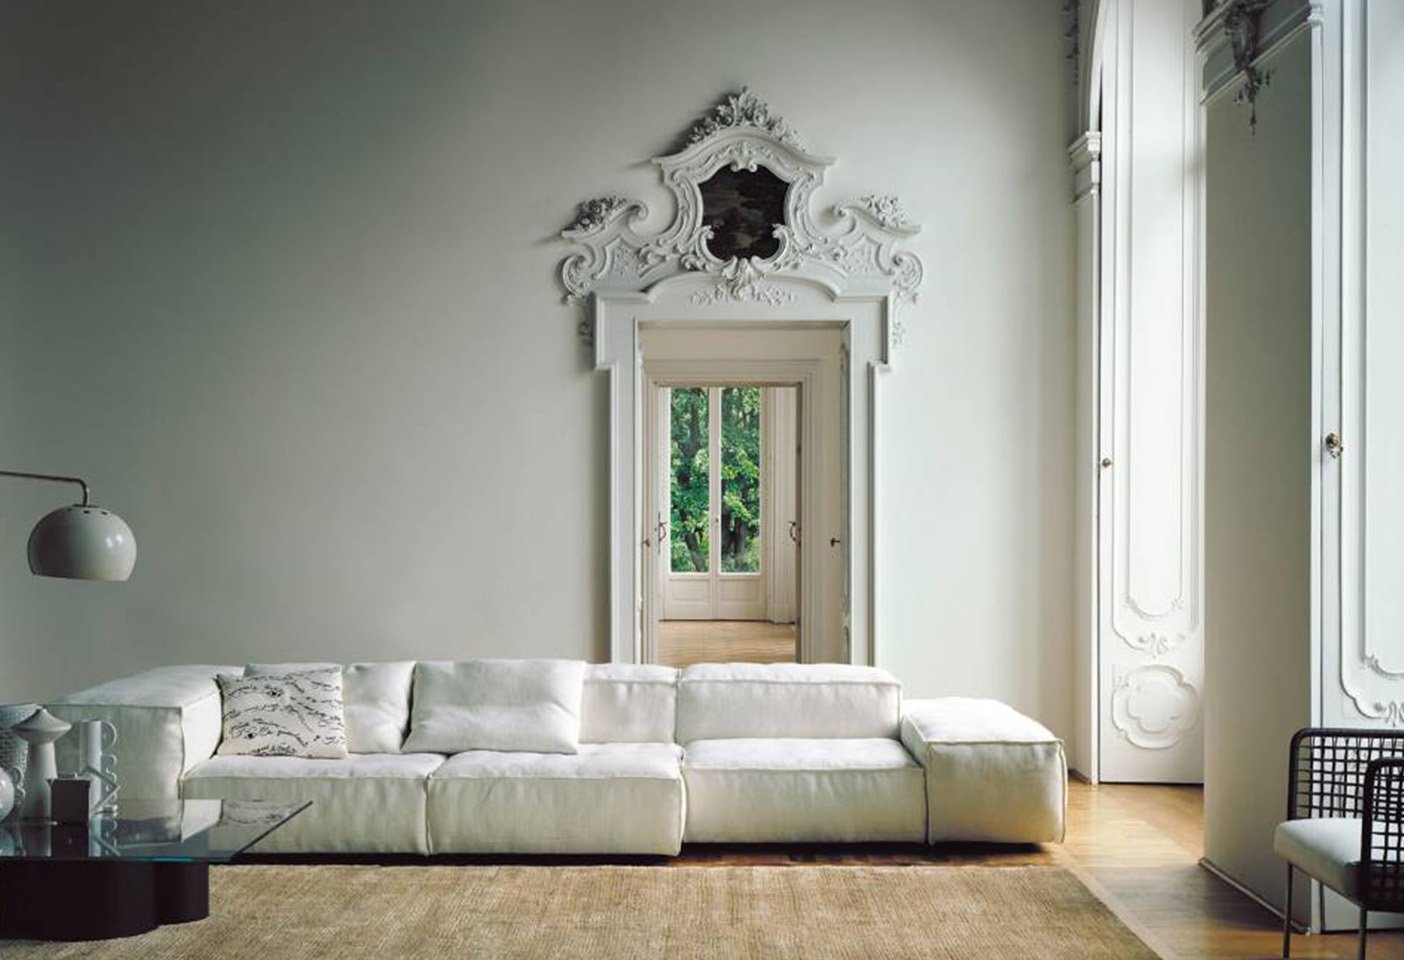 The Extra Soft sofa, one of Piero Lissoni's most popular designs for Living Divani. Photo c/o Living Divani.